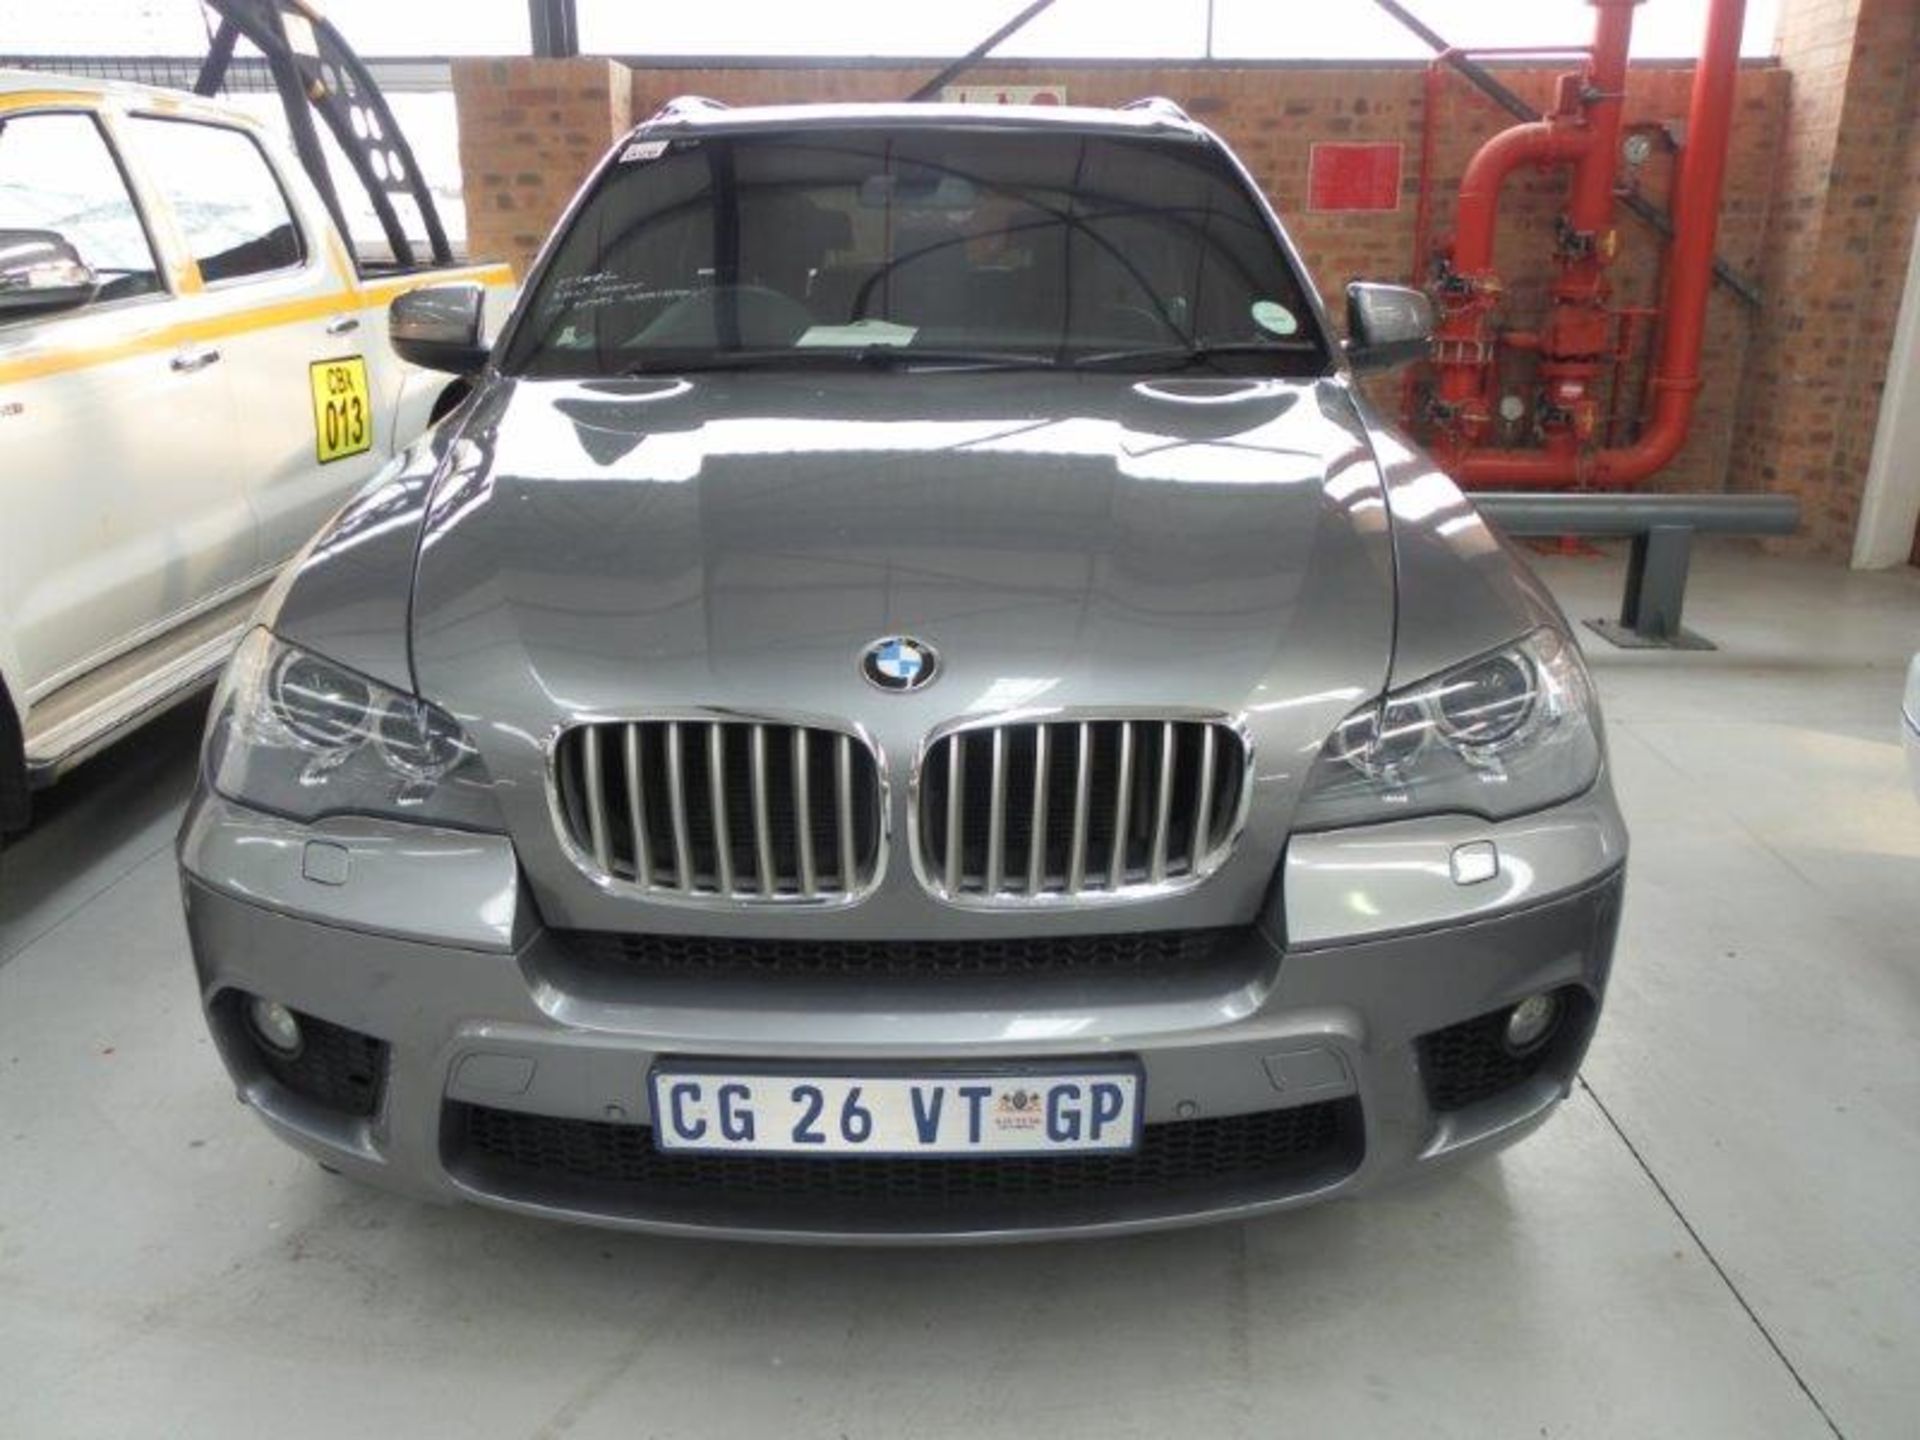 2013 CG26VTGP BMW X5 X-Drive 4.0D Auto (Vin No: WBAZW62030L479886 )(PDC, Sunroof, Black Leather